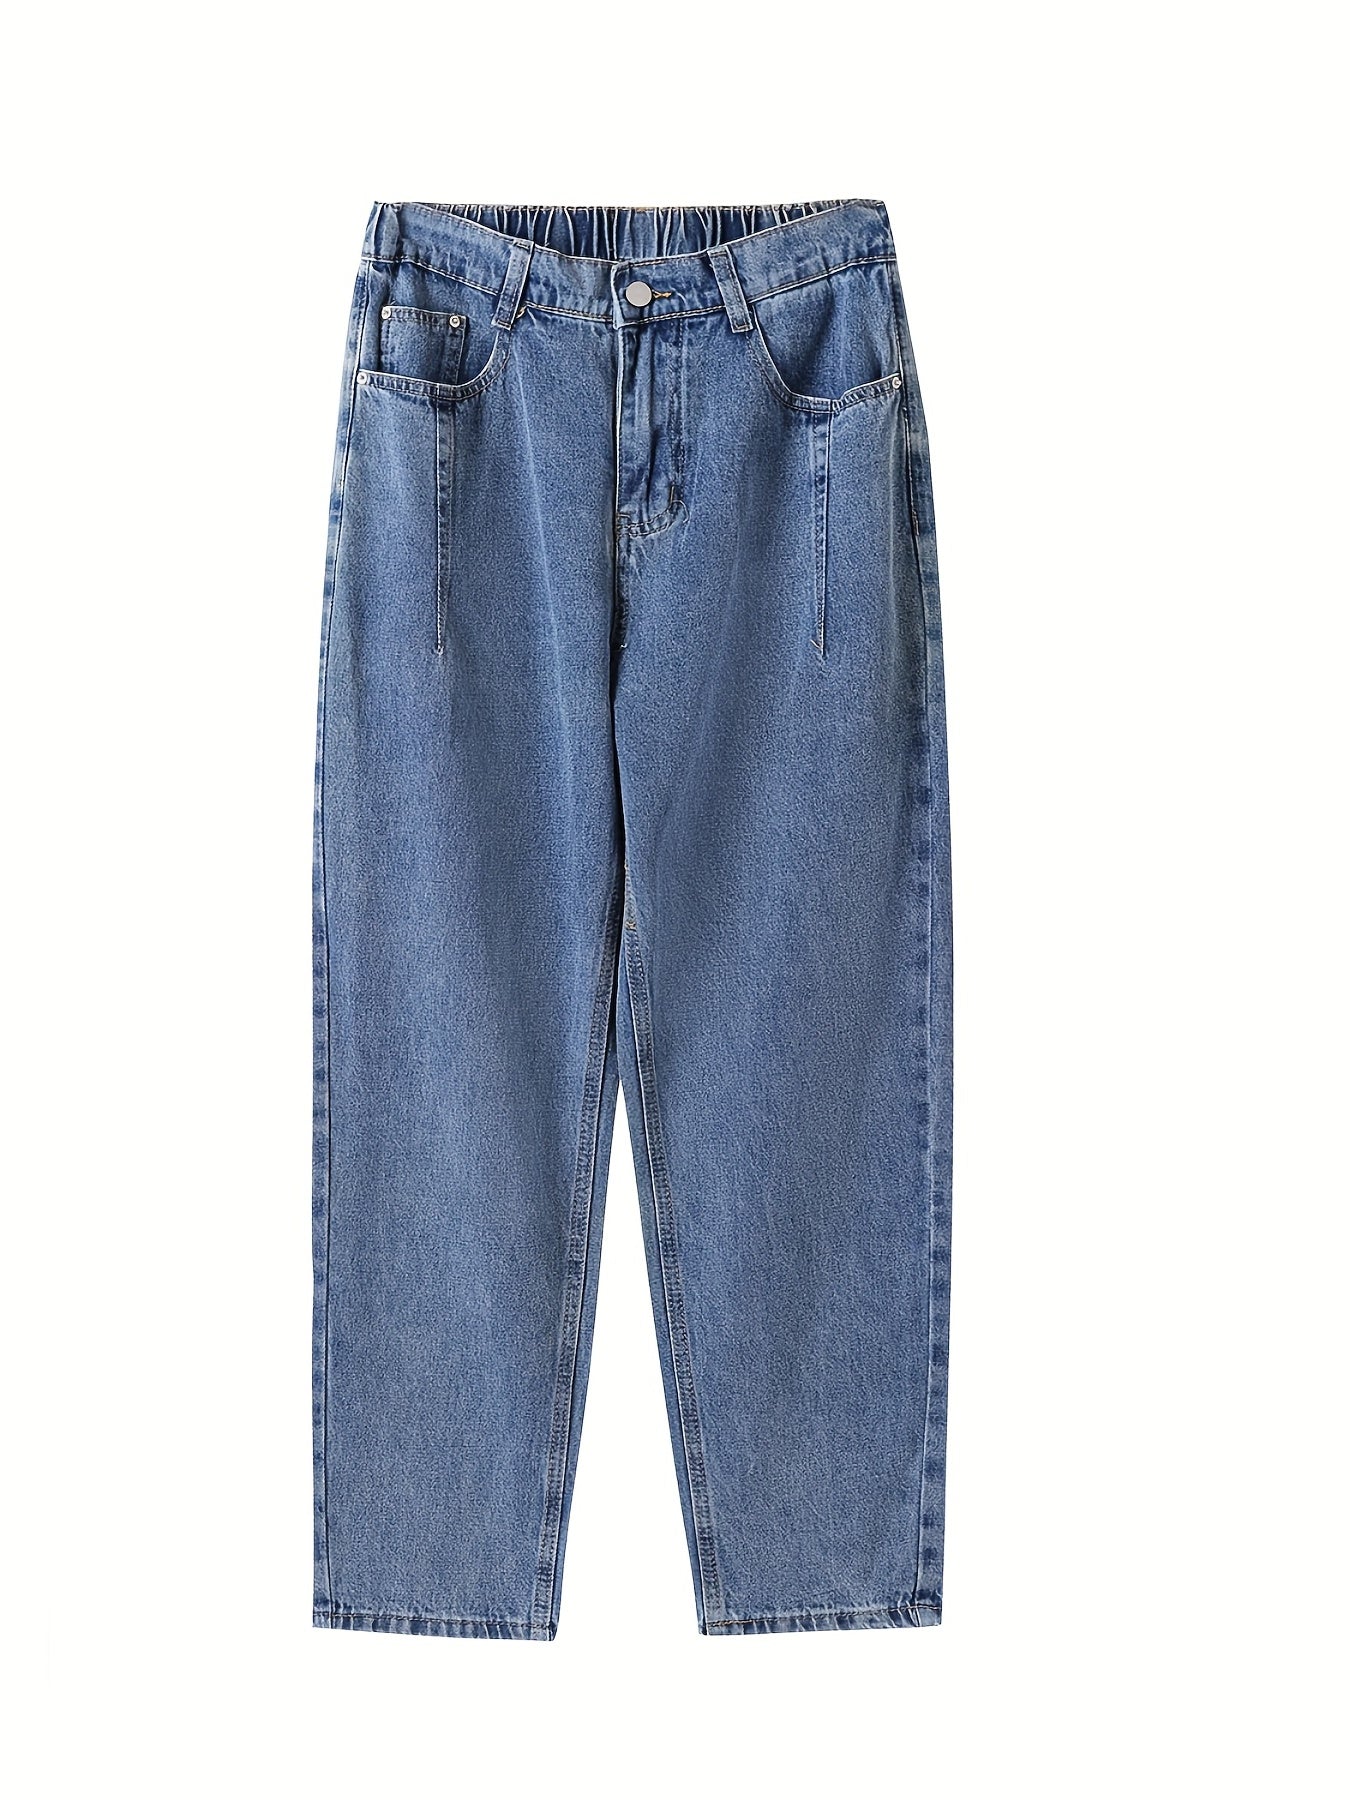 「lovevop」Roll Up Hem Mid Waist Harem Jeans, Slash Pockets Street Causal Style Loose Denim Pants, Women's Denim Jeans & Clothing